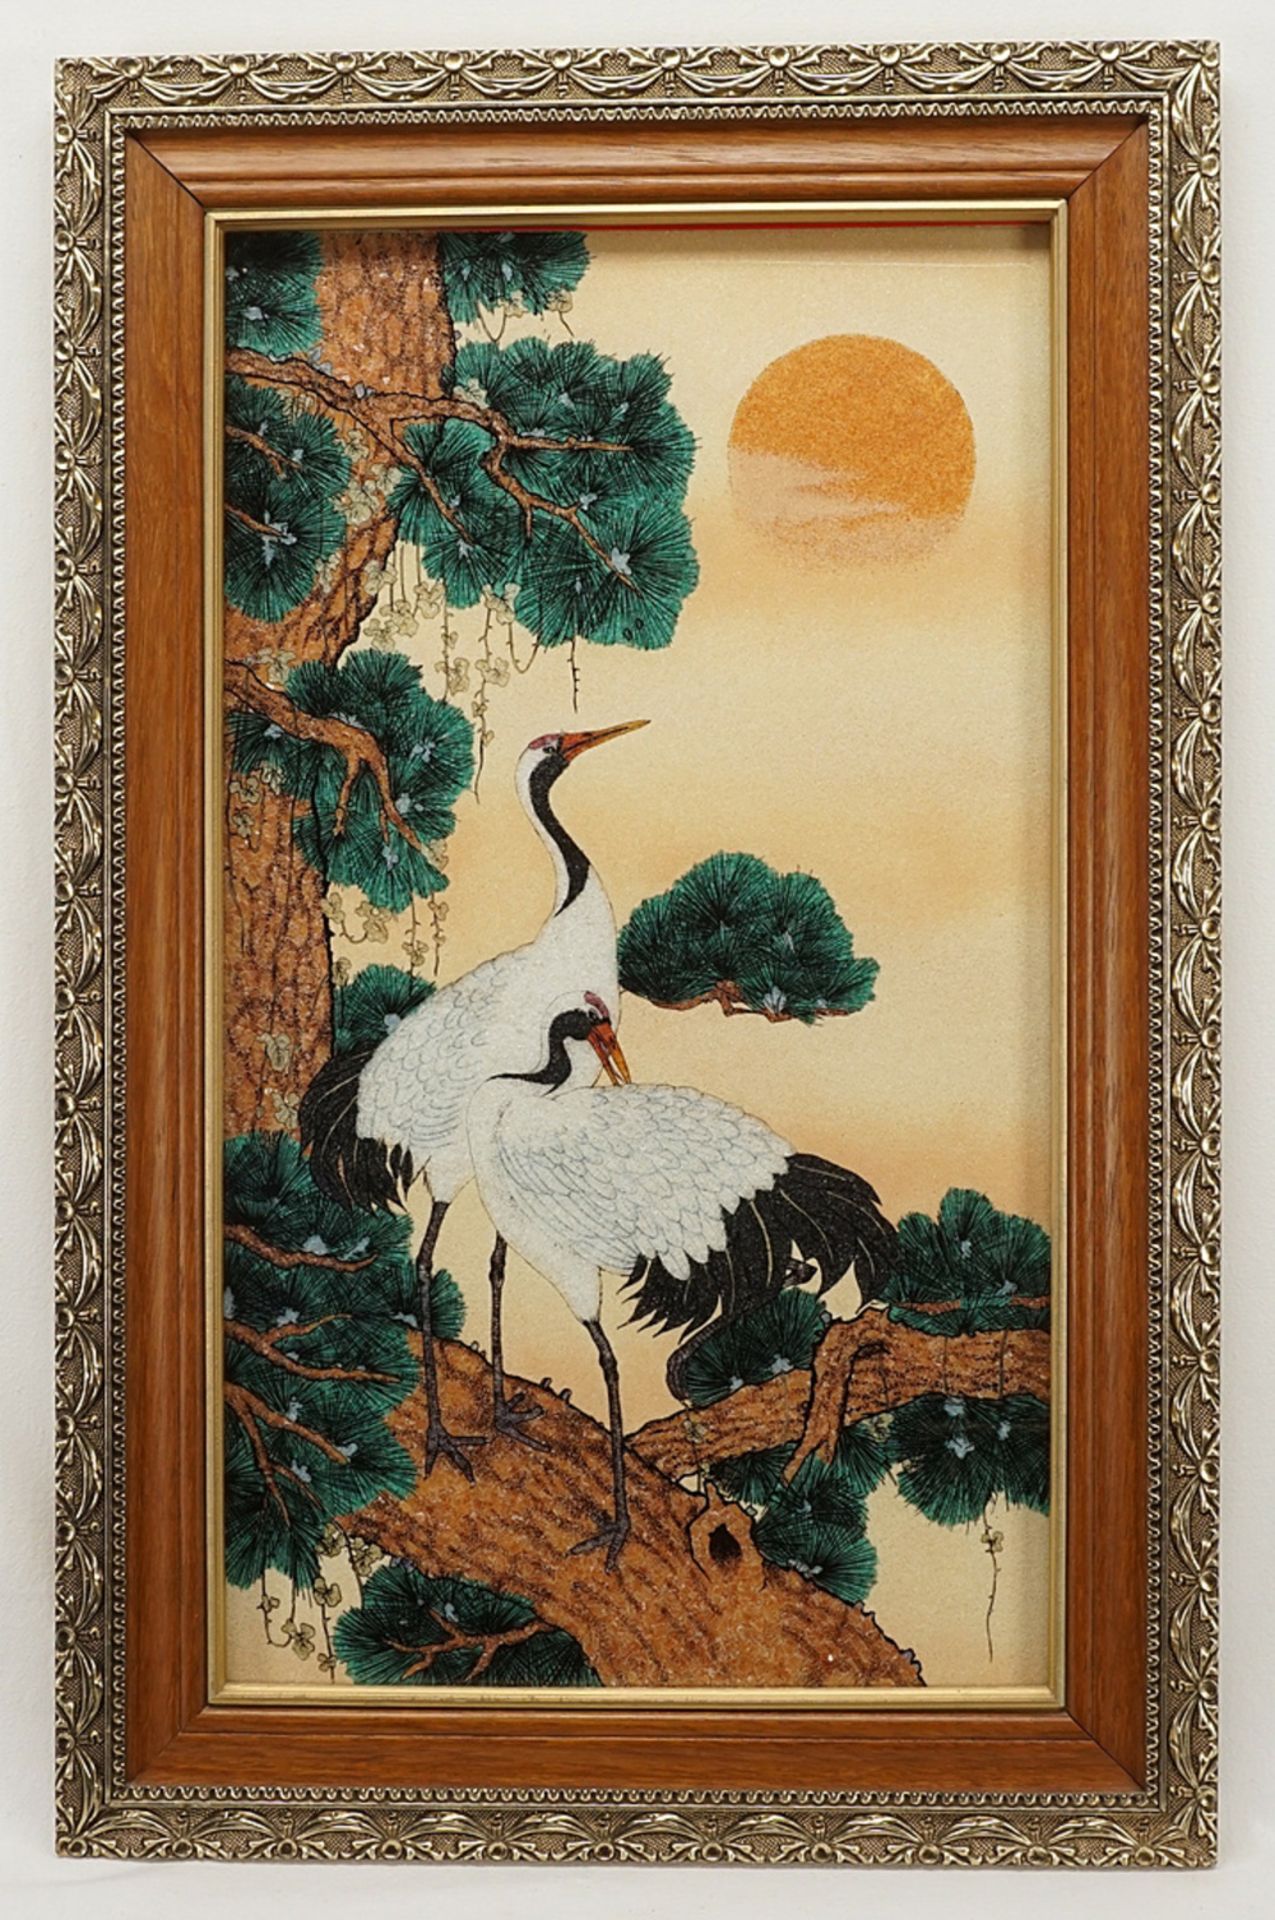 Gemstone collage "Cranes", 20th century - Image 2 of 3